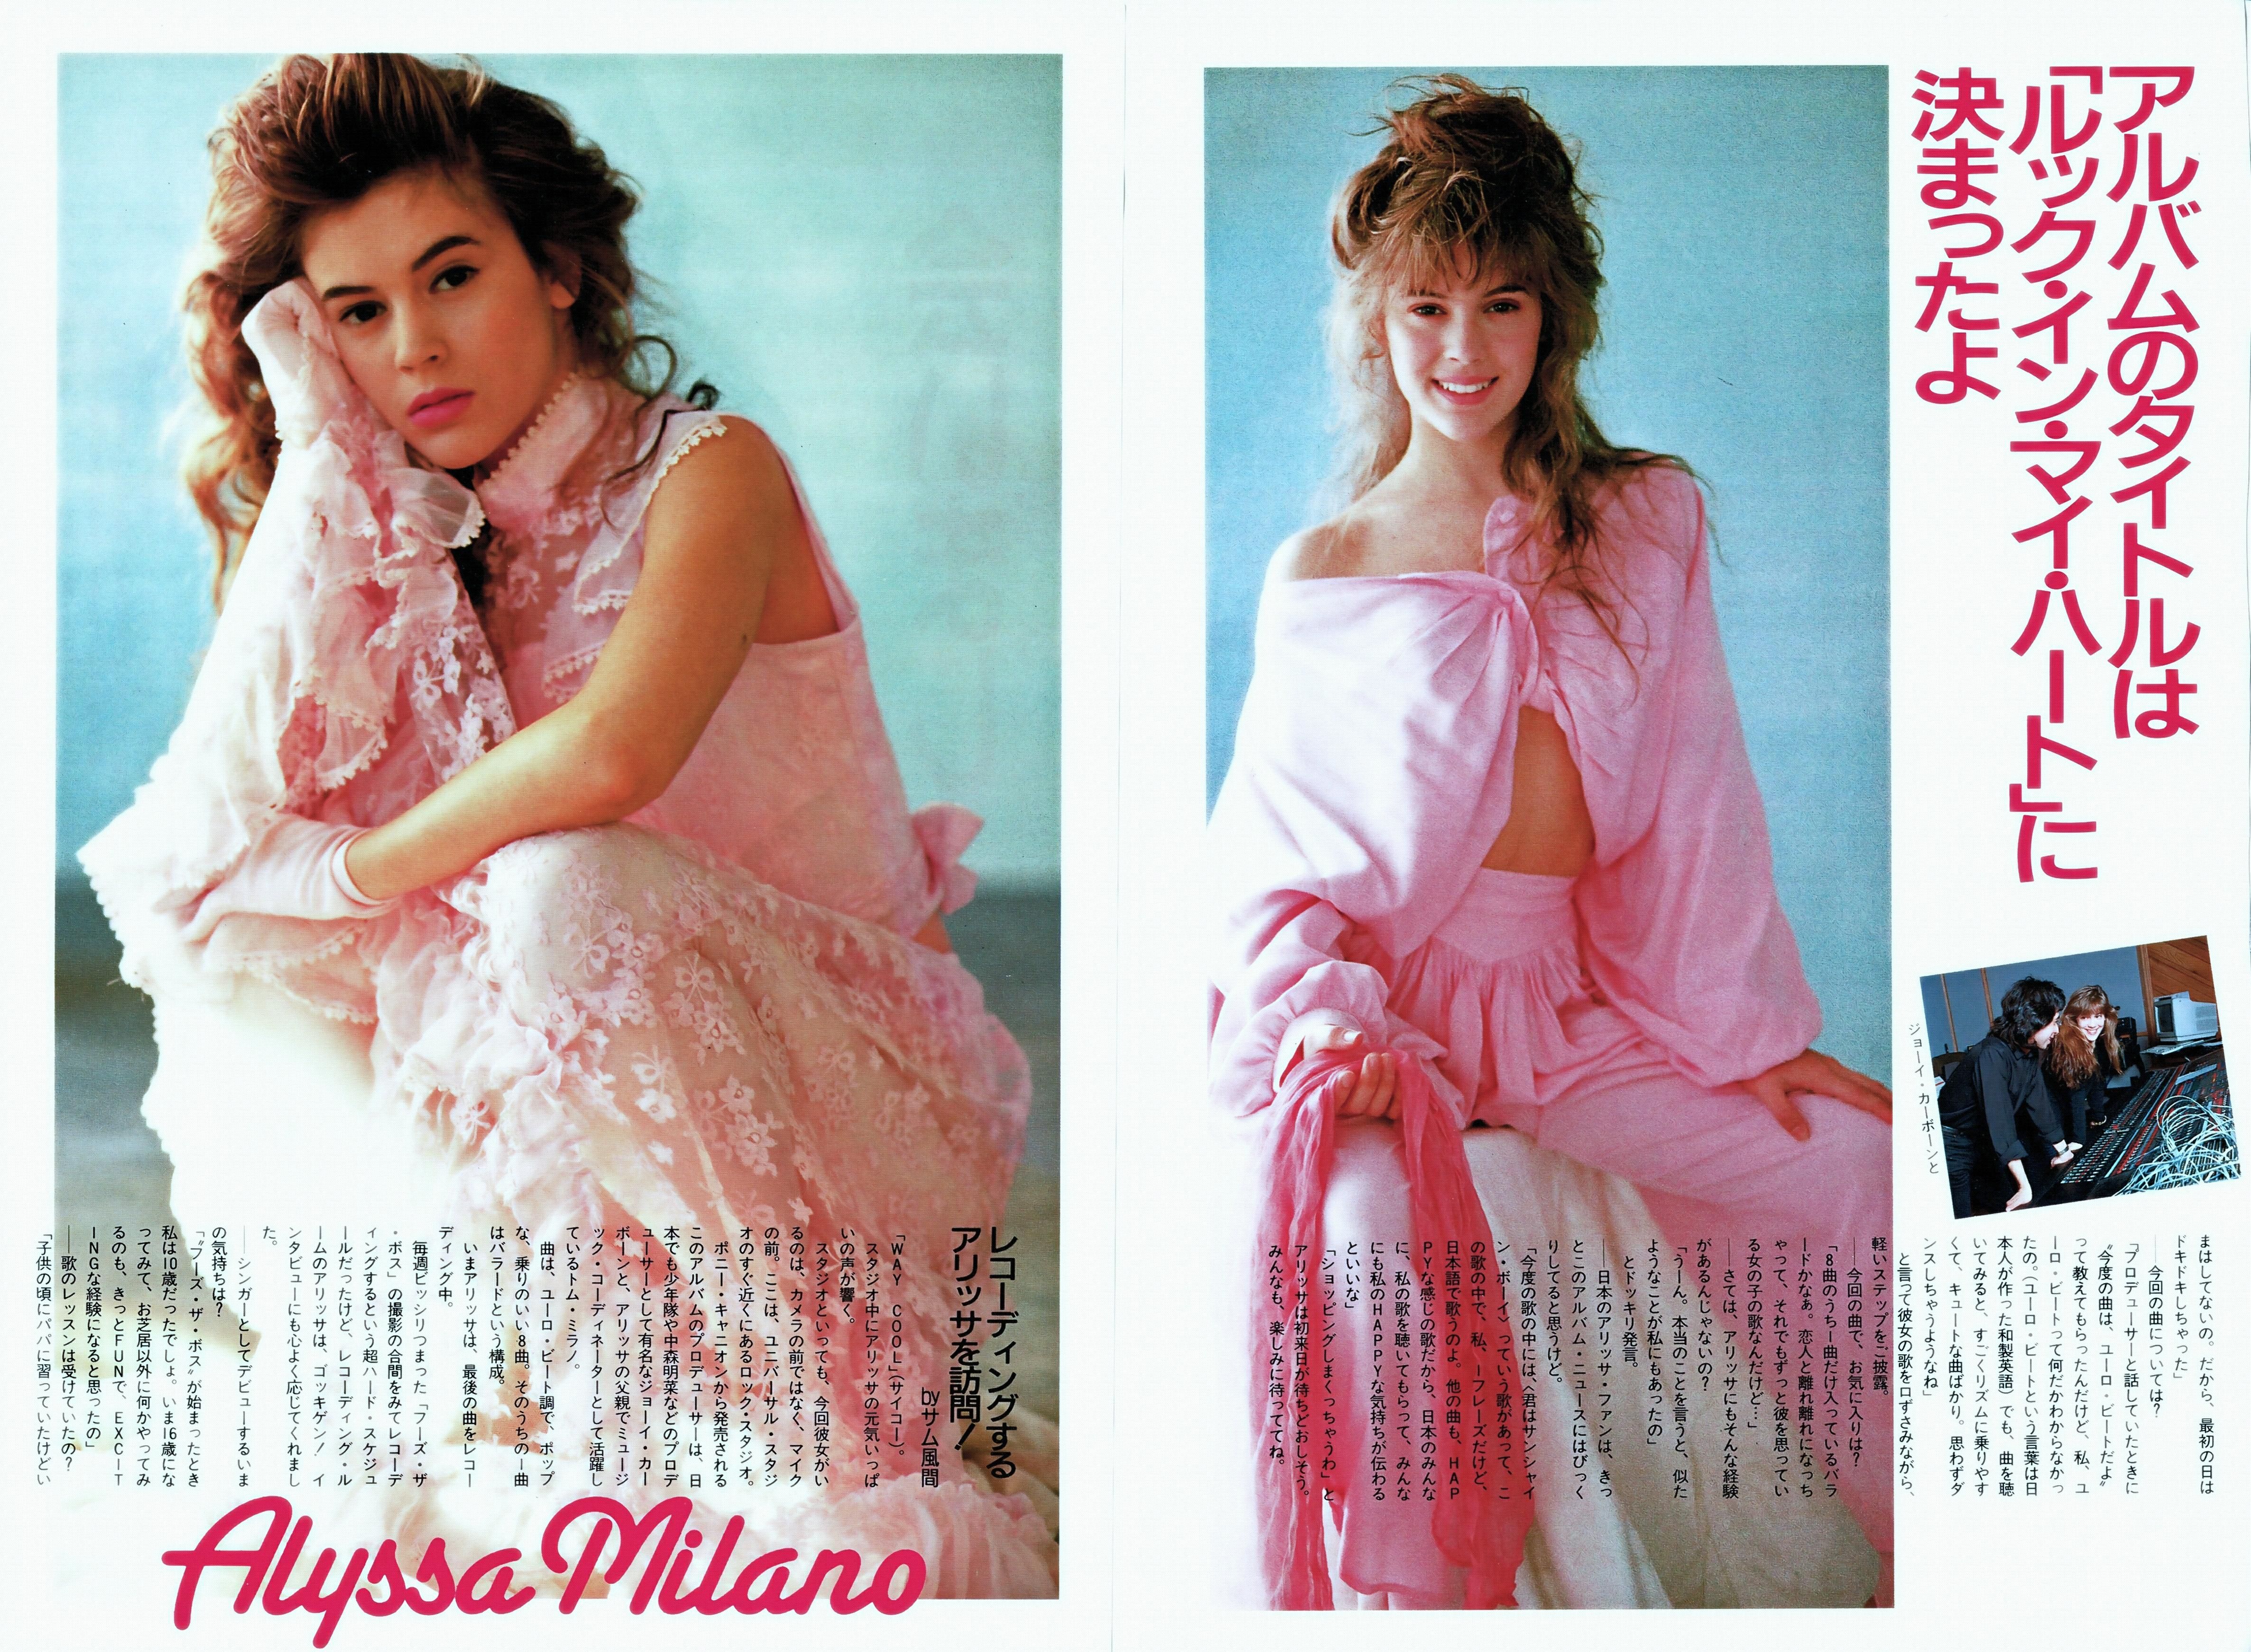 Beautiful Alyssa Milano Portrait in Pink Dress Wallpapers